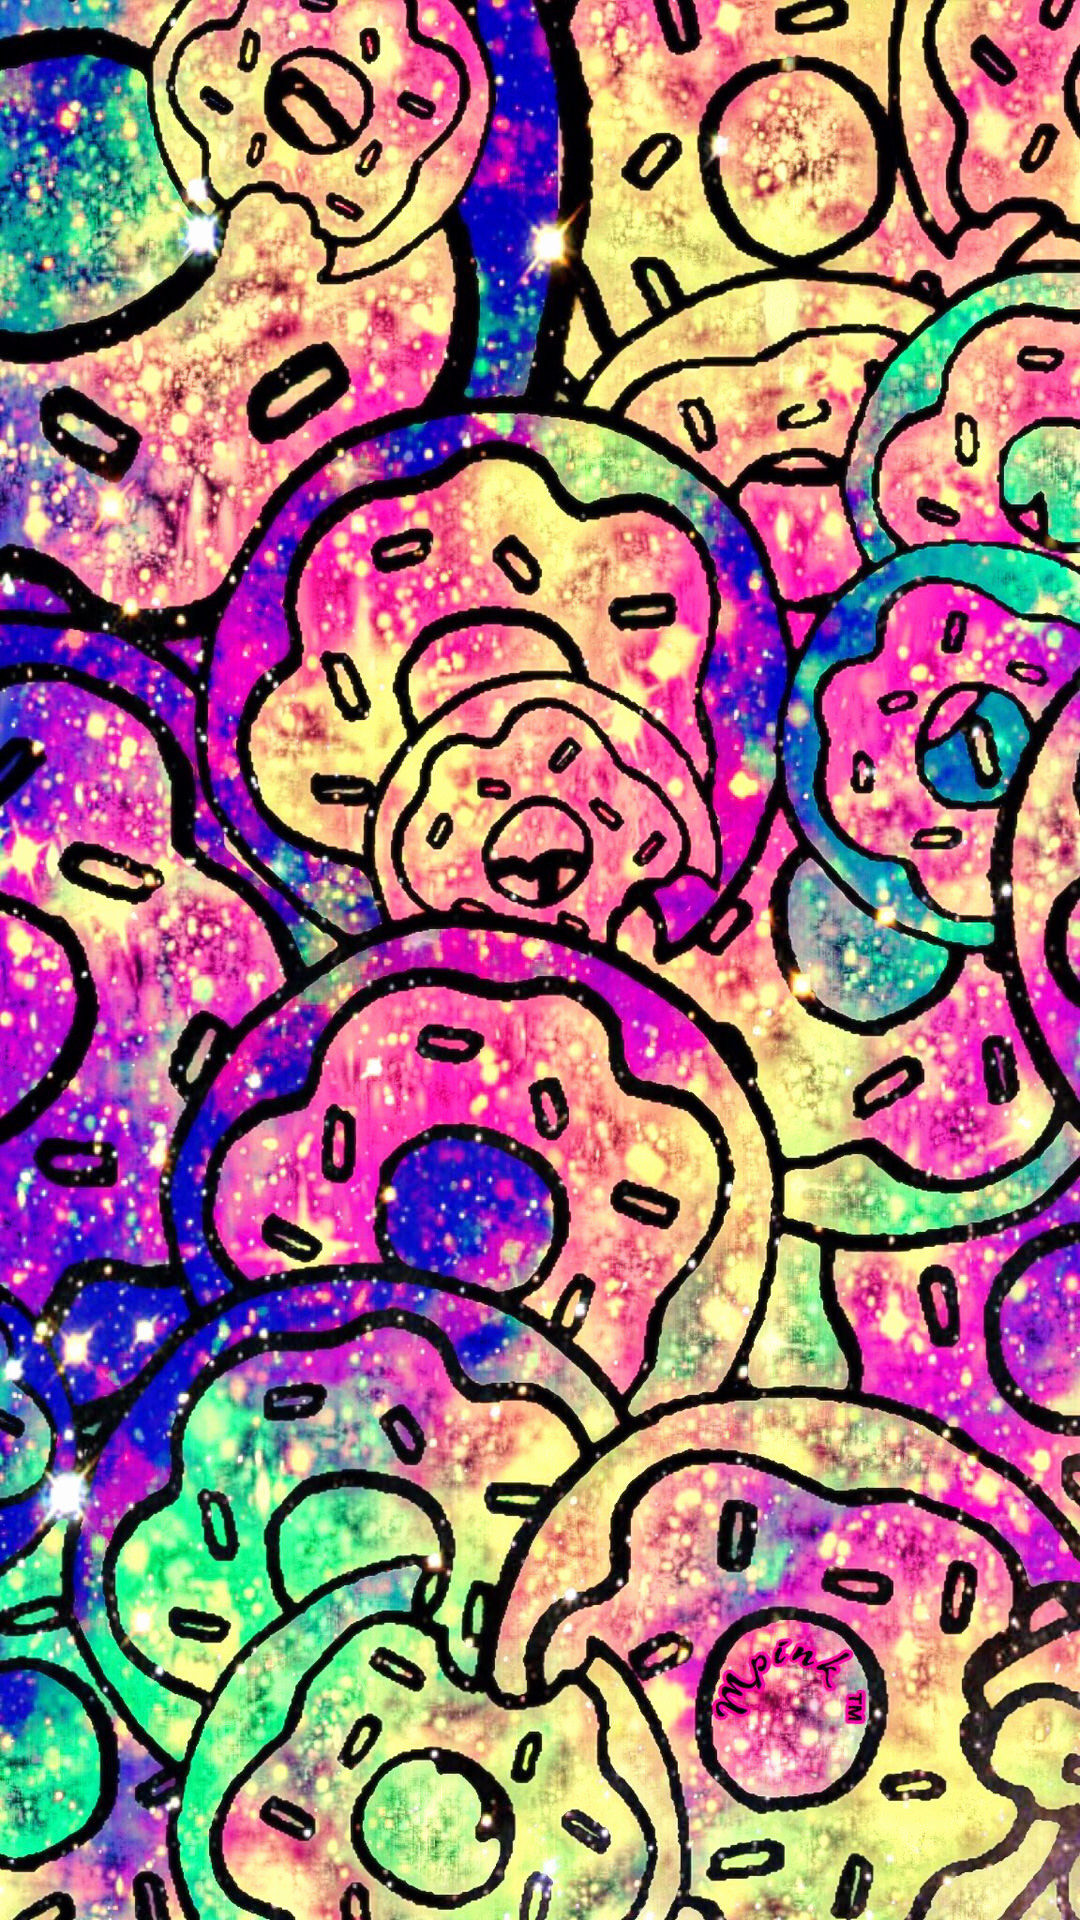 1080x1920 Cute Girly Wallpapers New Rainbow Galaxy Rainbow Girly Cool Backgrounds 1080x1920 Wallpaper Teahub Io